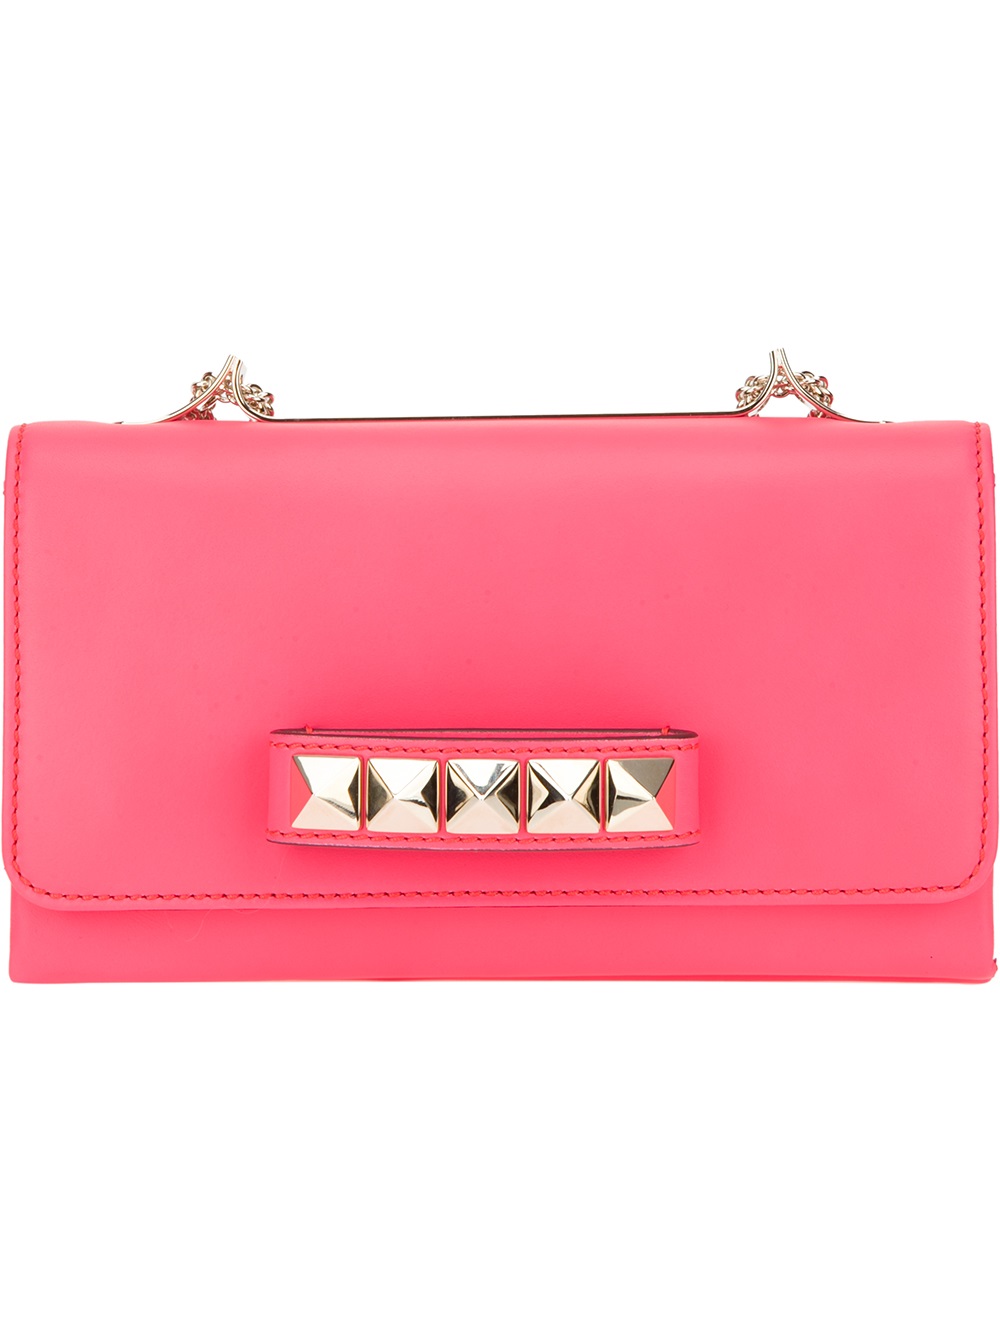 Lyst - Valentino Va Va Voom Shoulder Bag in Pink